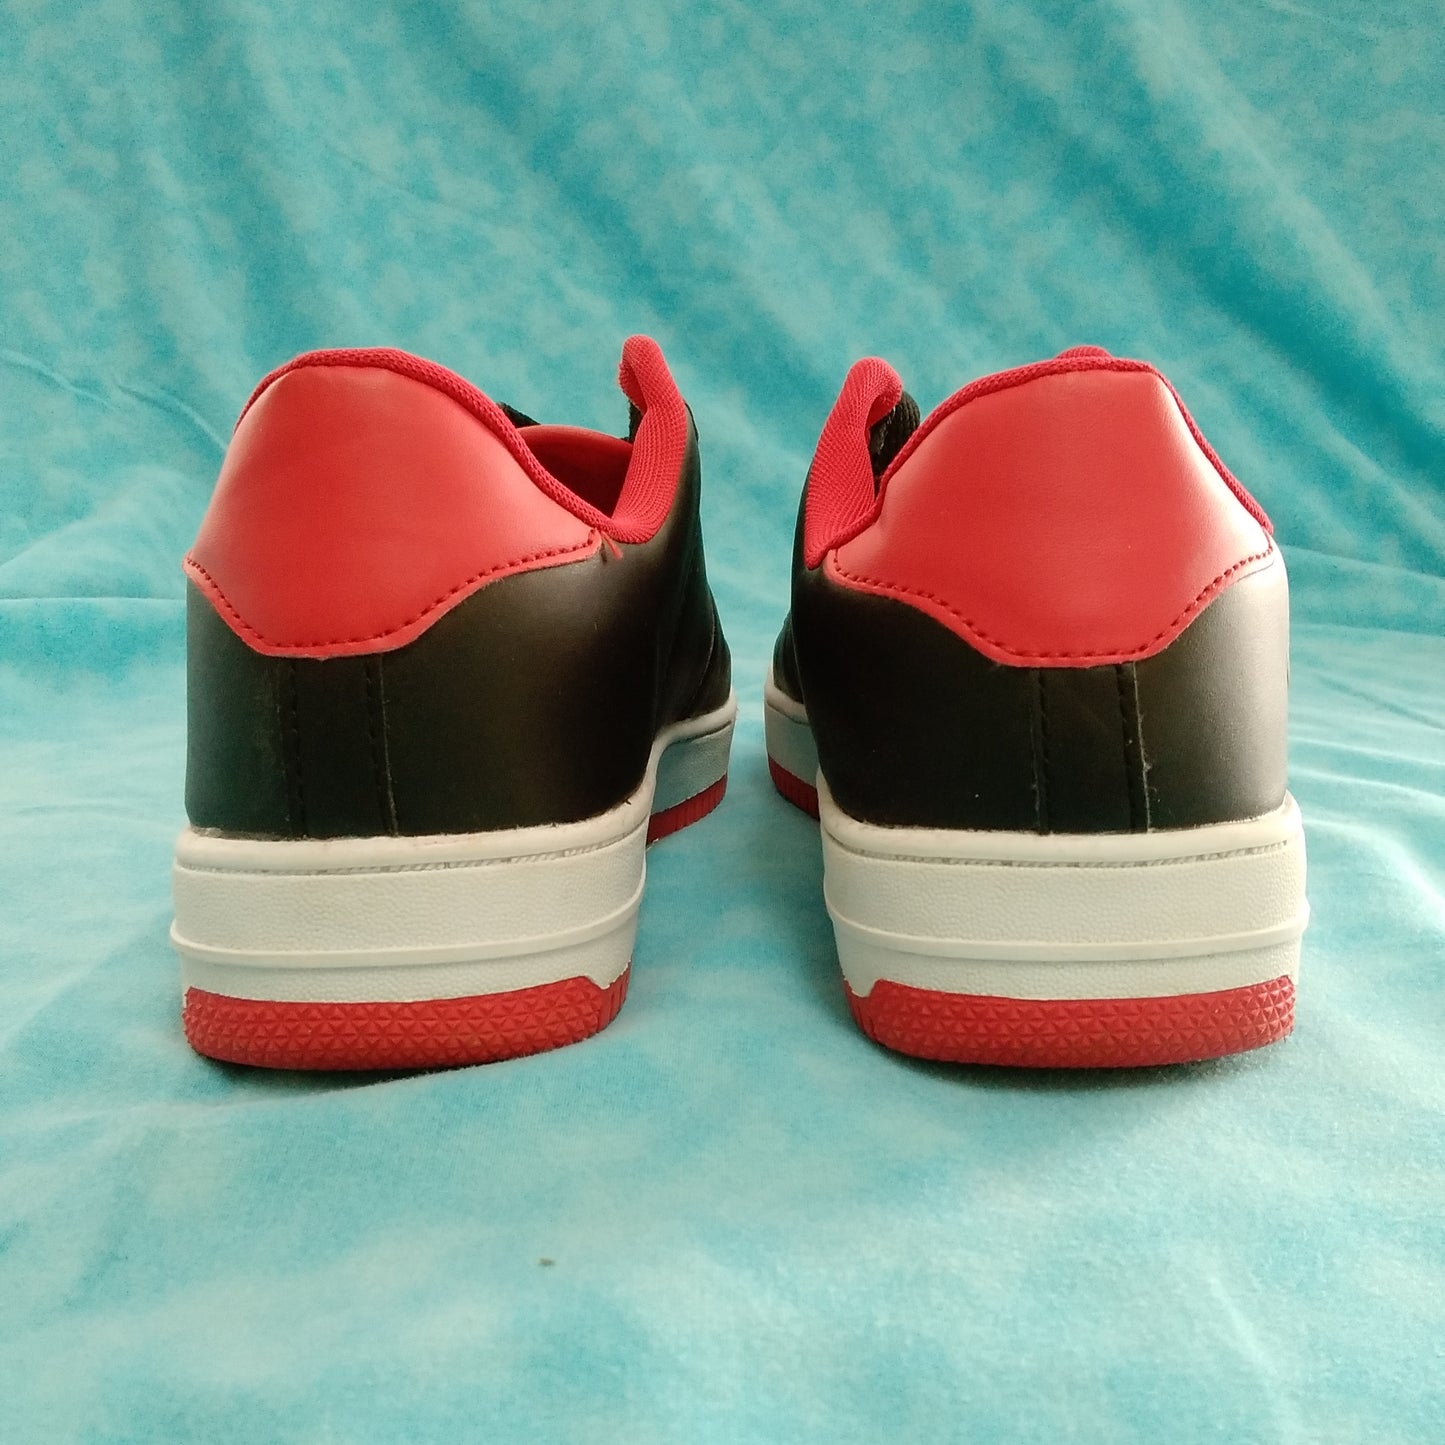 Men's Phat Farm Black/Red Sneakers - Size: 9.5